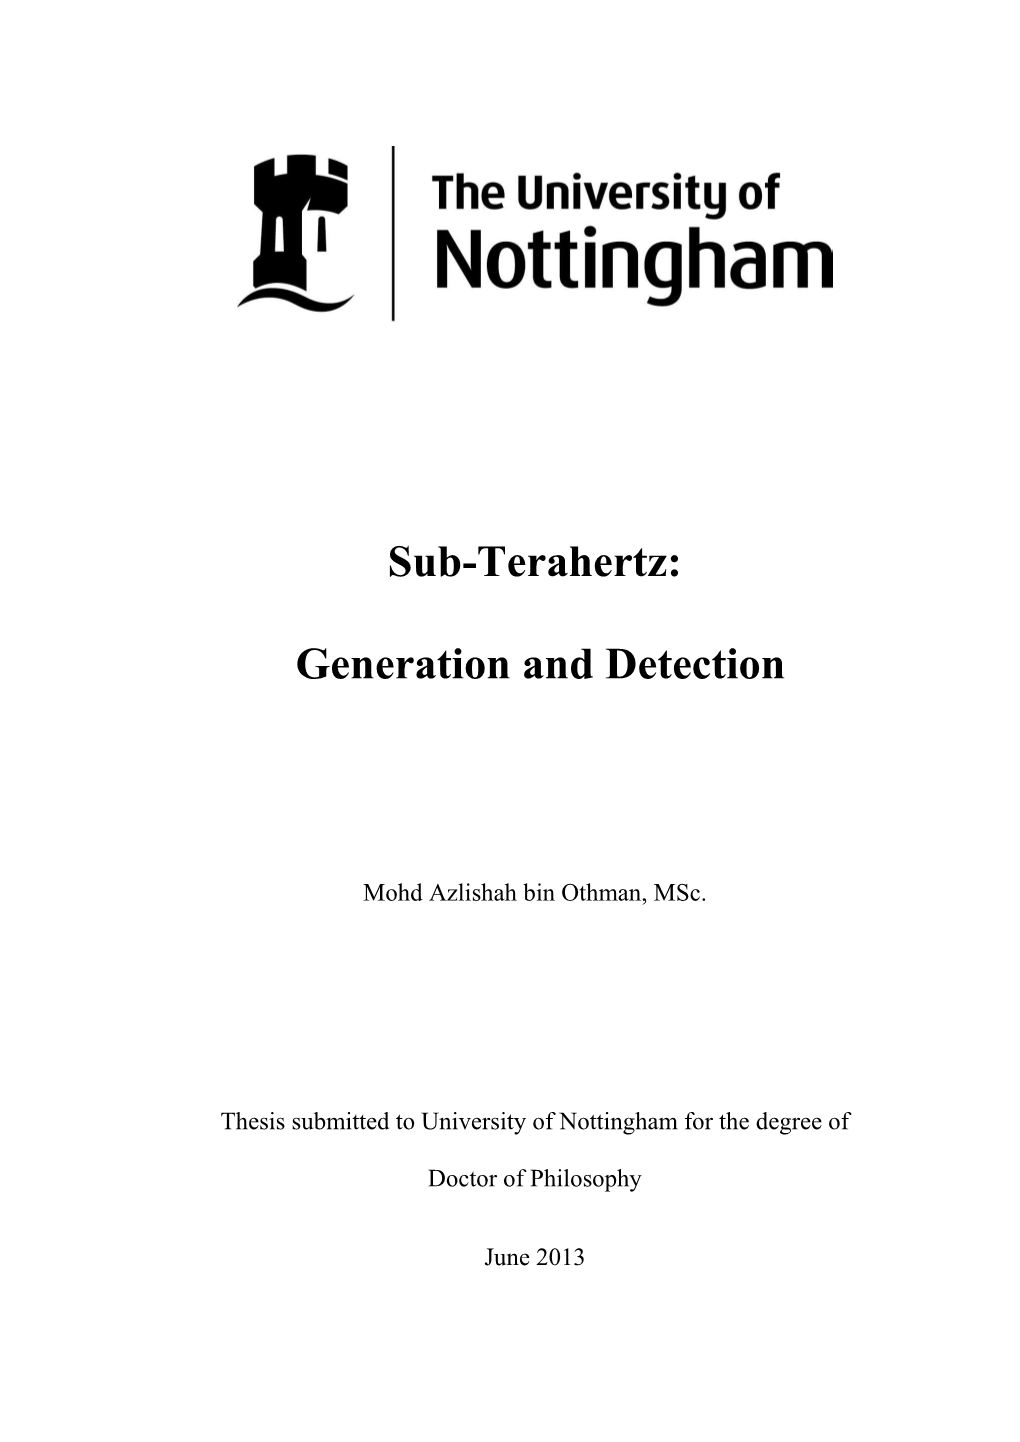 Sub-Terahertz: Generation and Detection